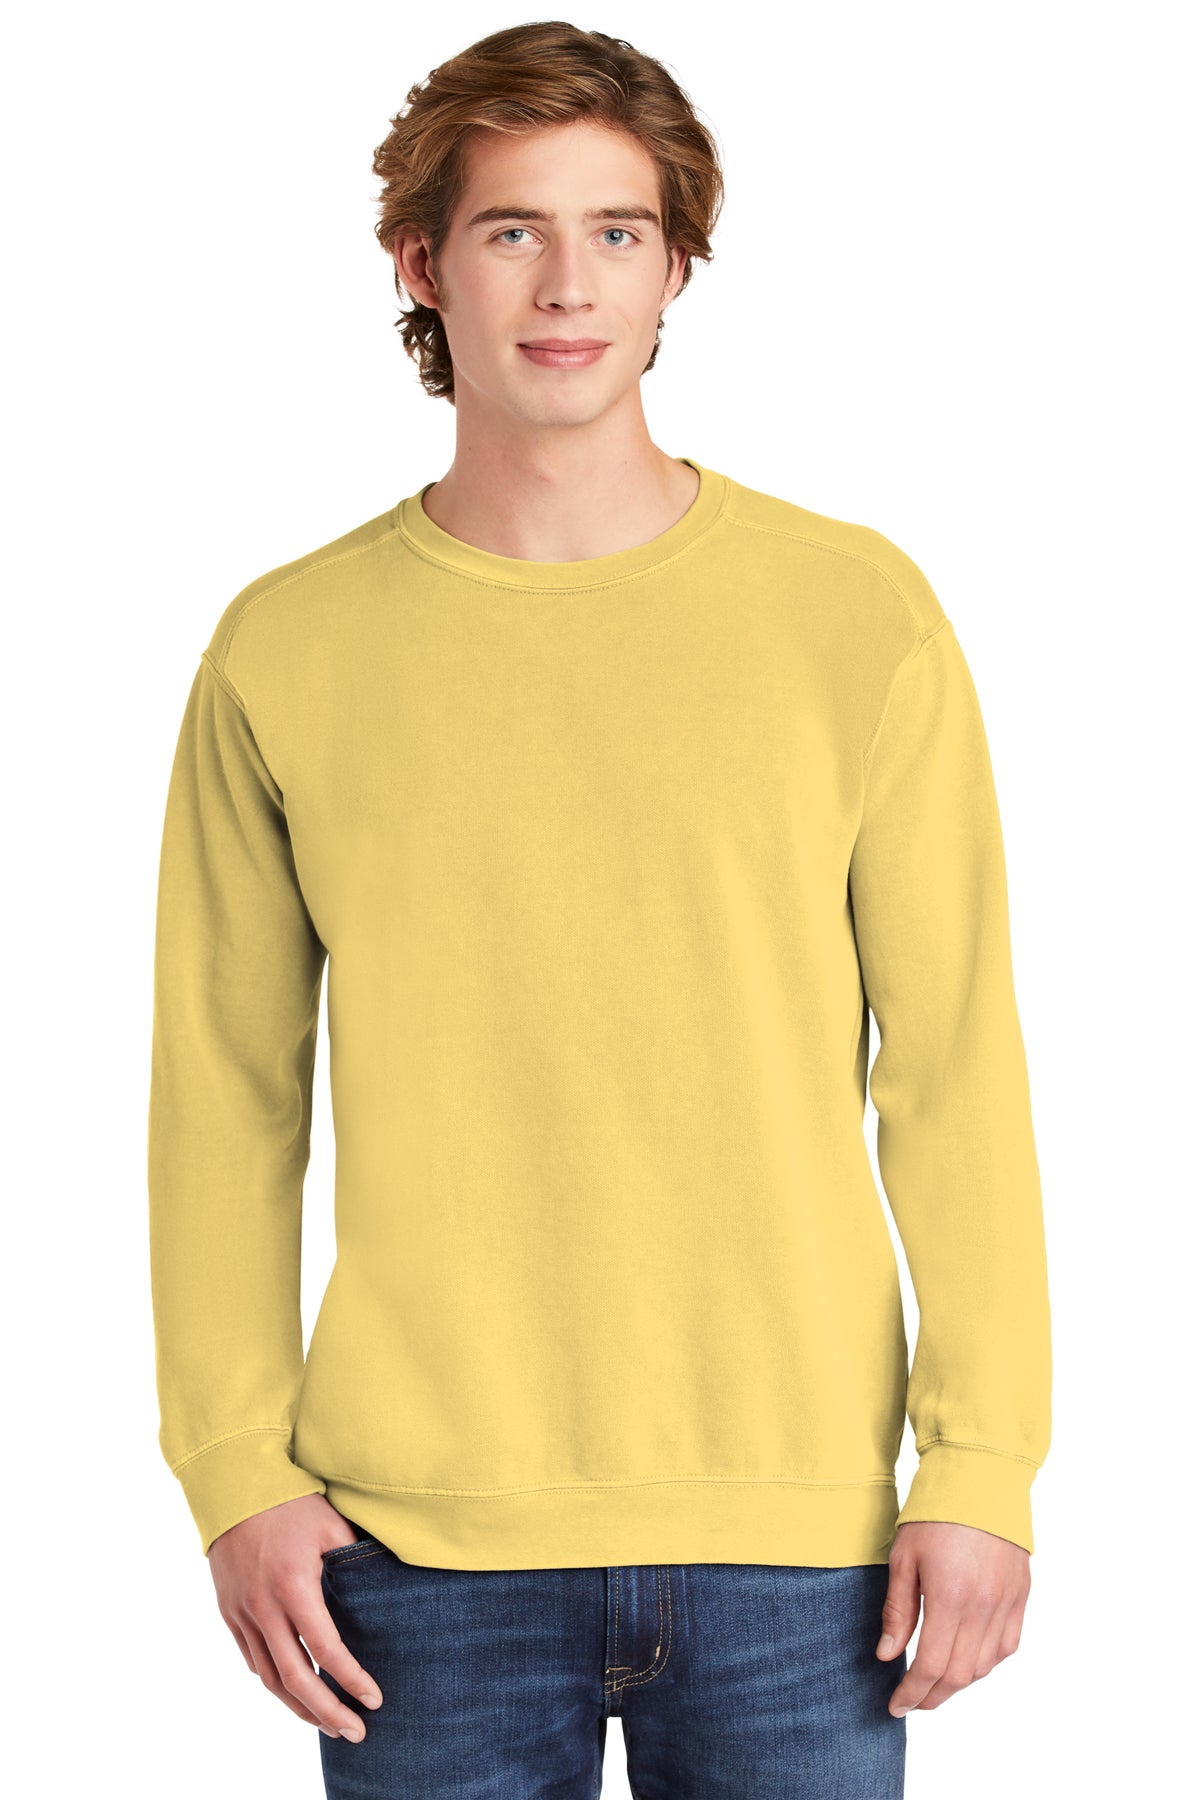 Comfort Colors Garment-Dyed Crewneck Sweatshirt (1566)